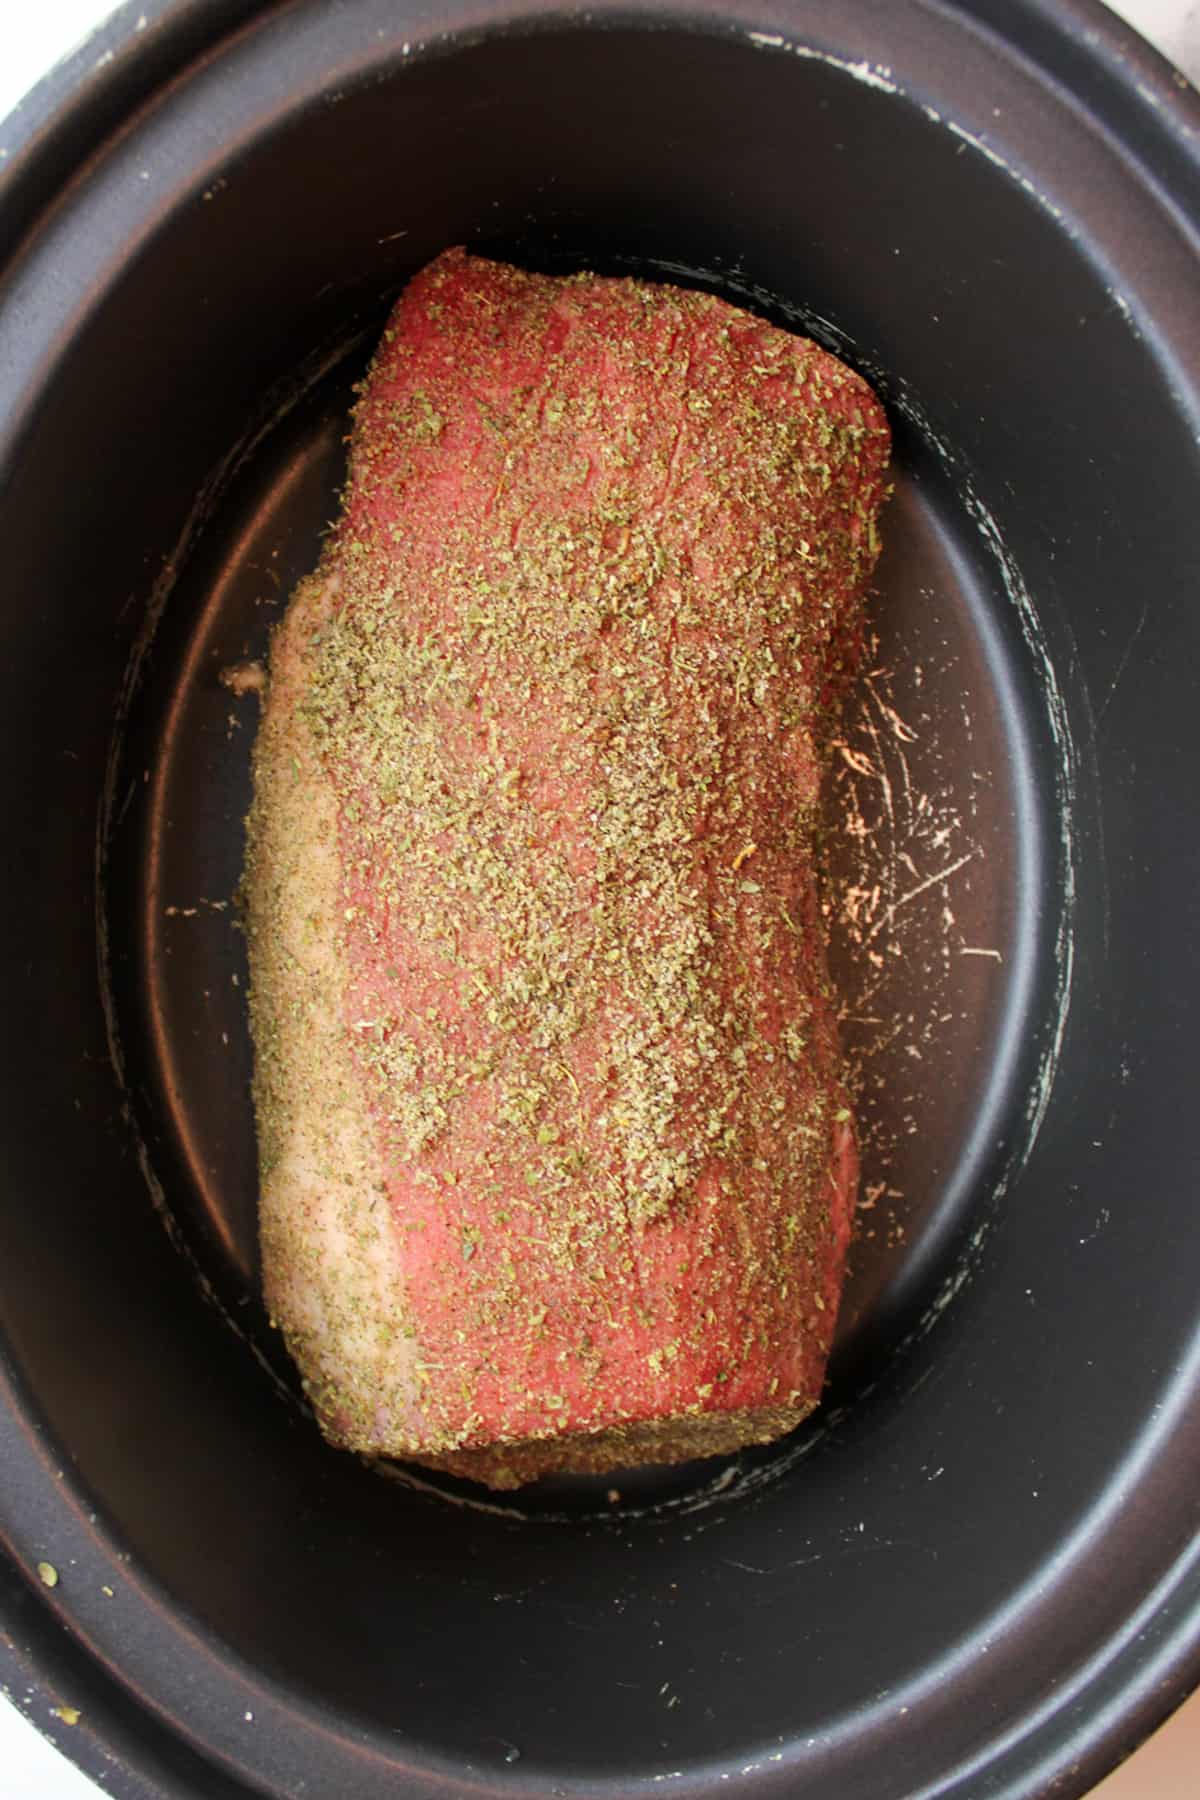 seasoning coated raw beef roast in crock pot.